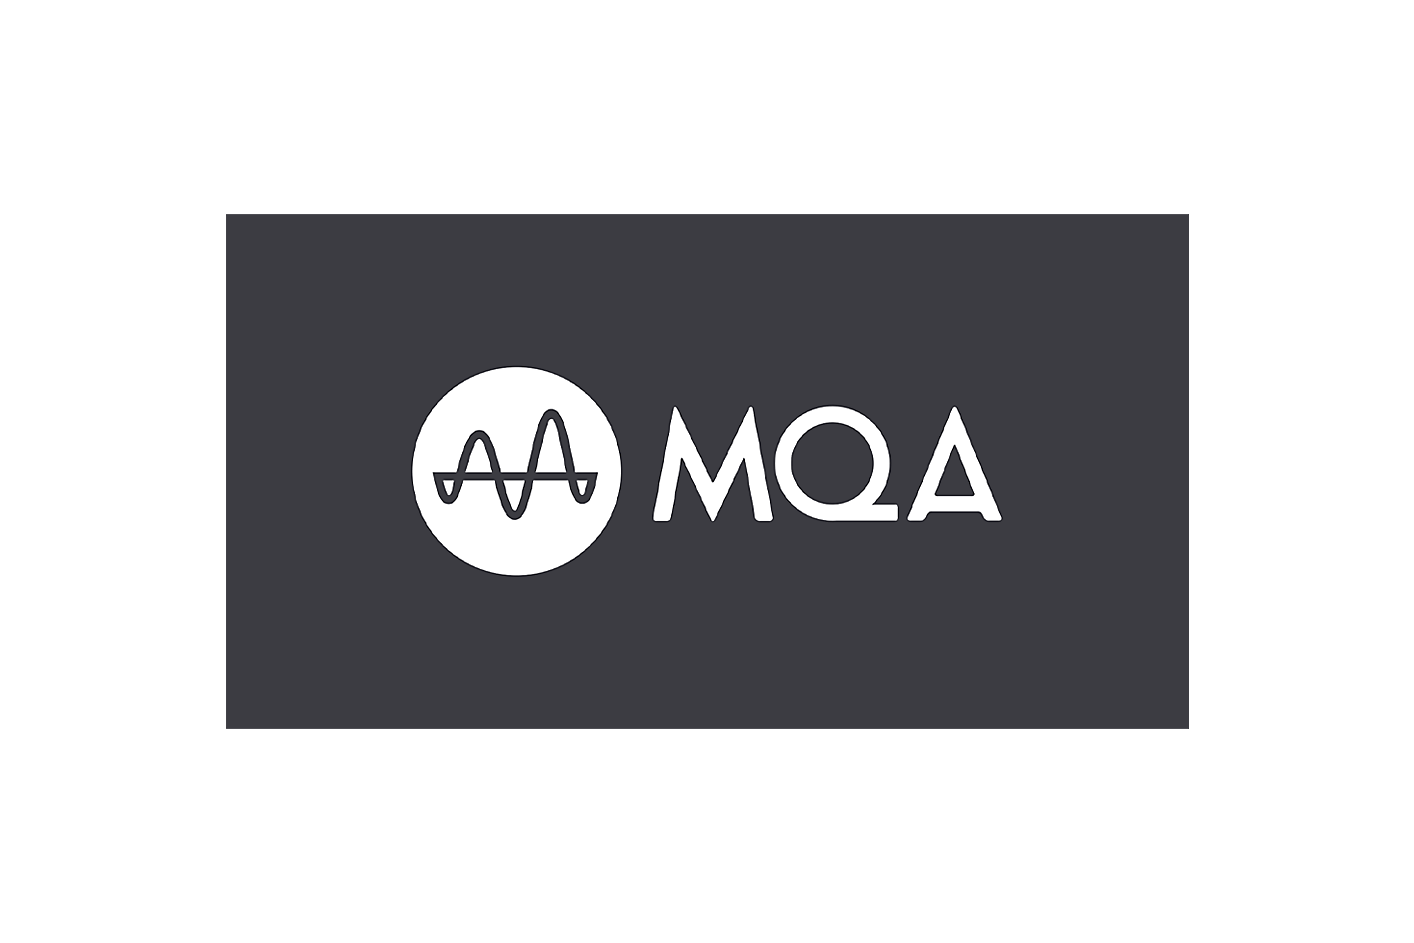 An image of the MQA logo.